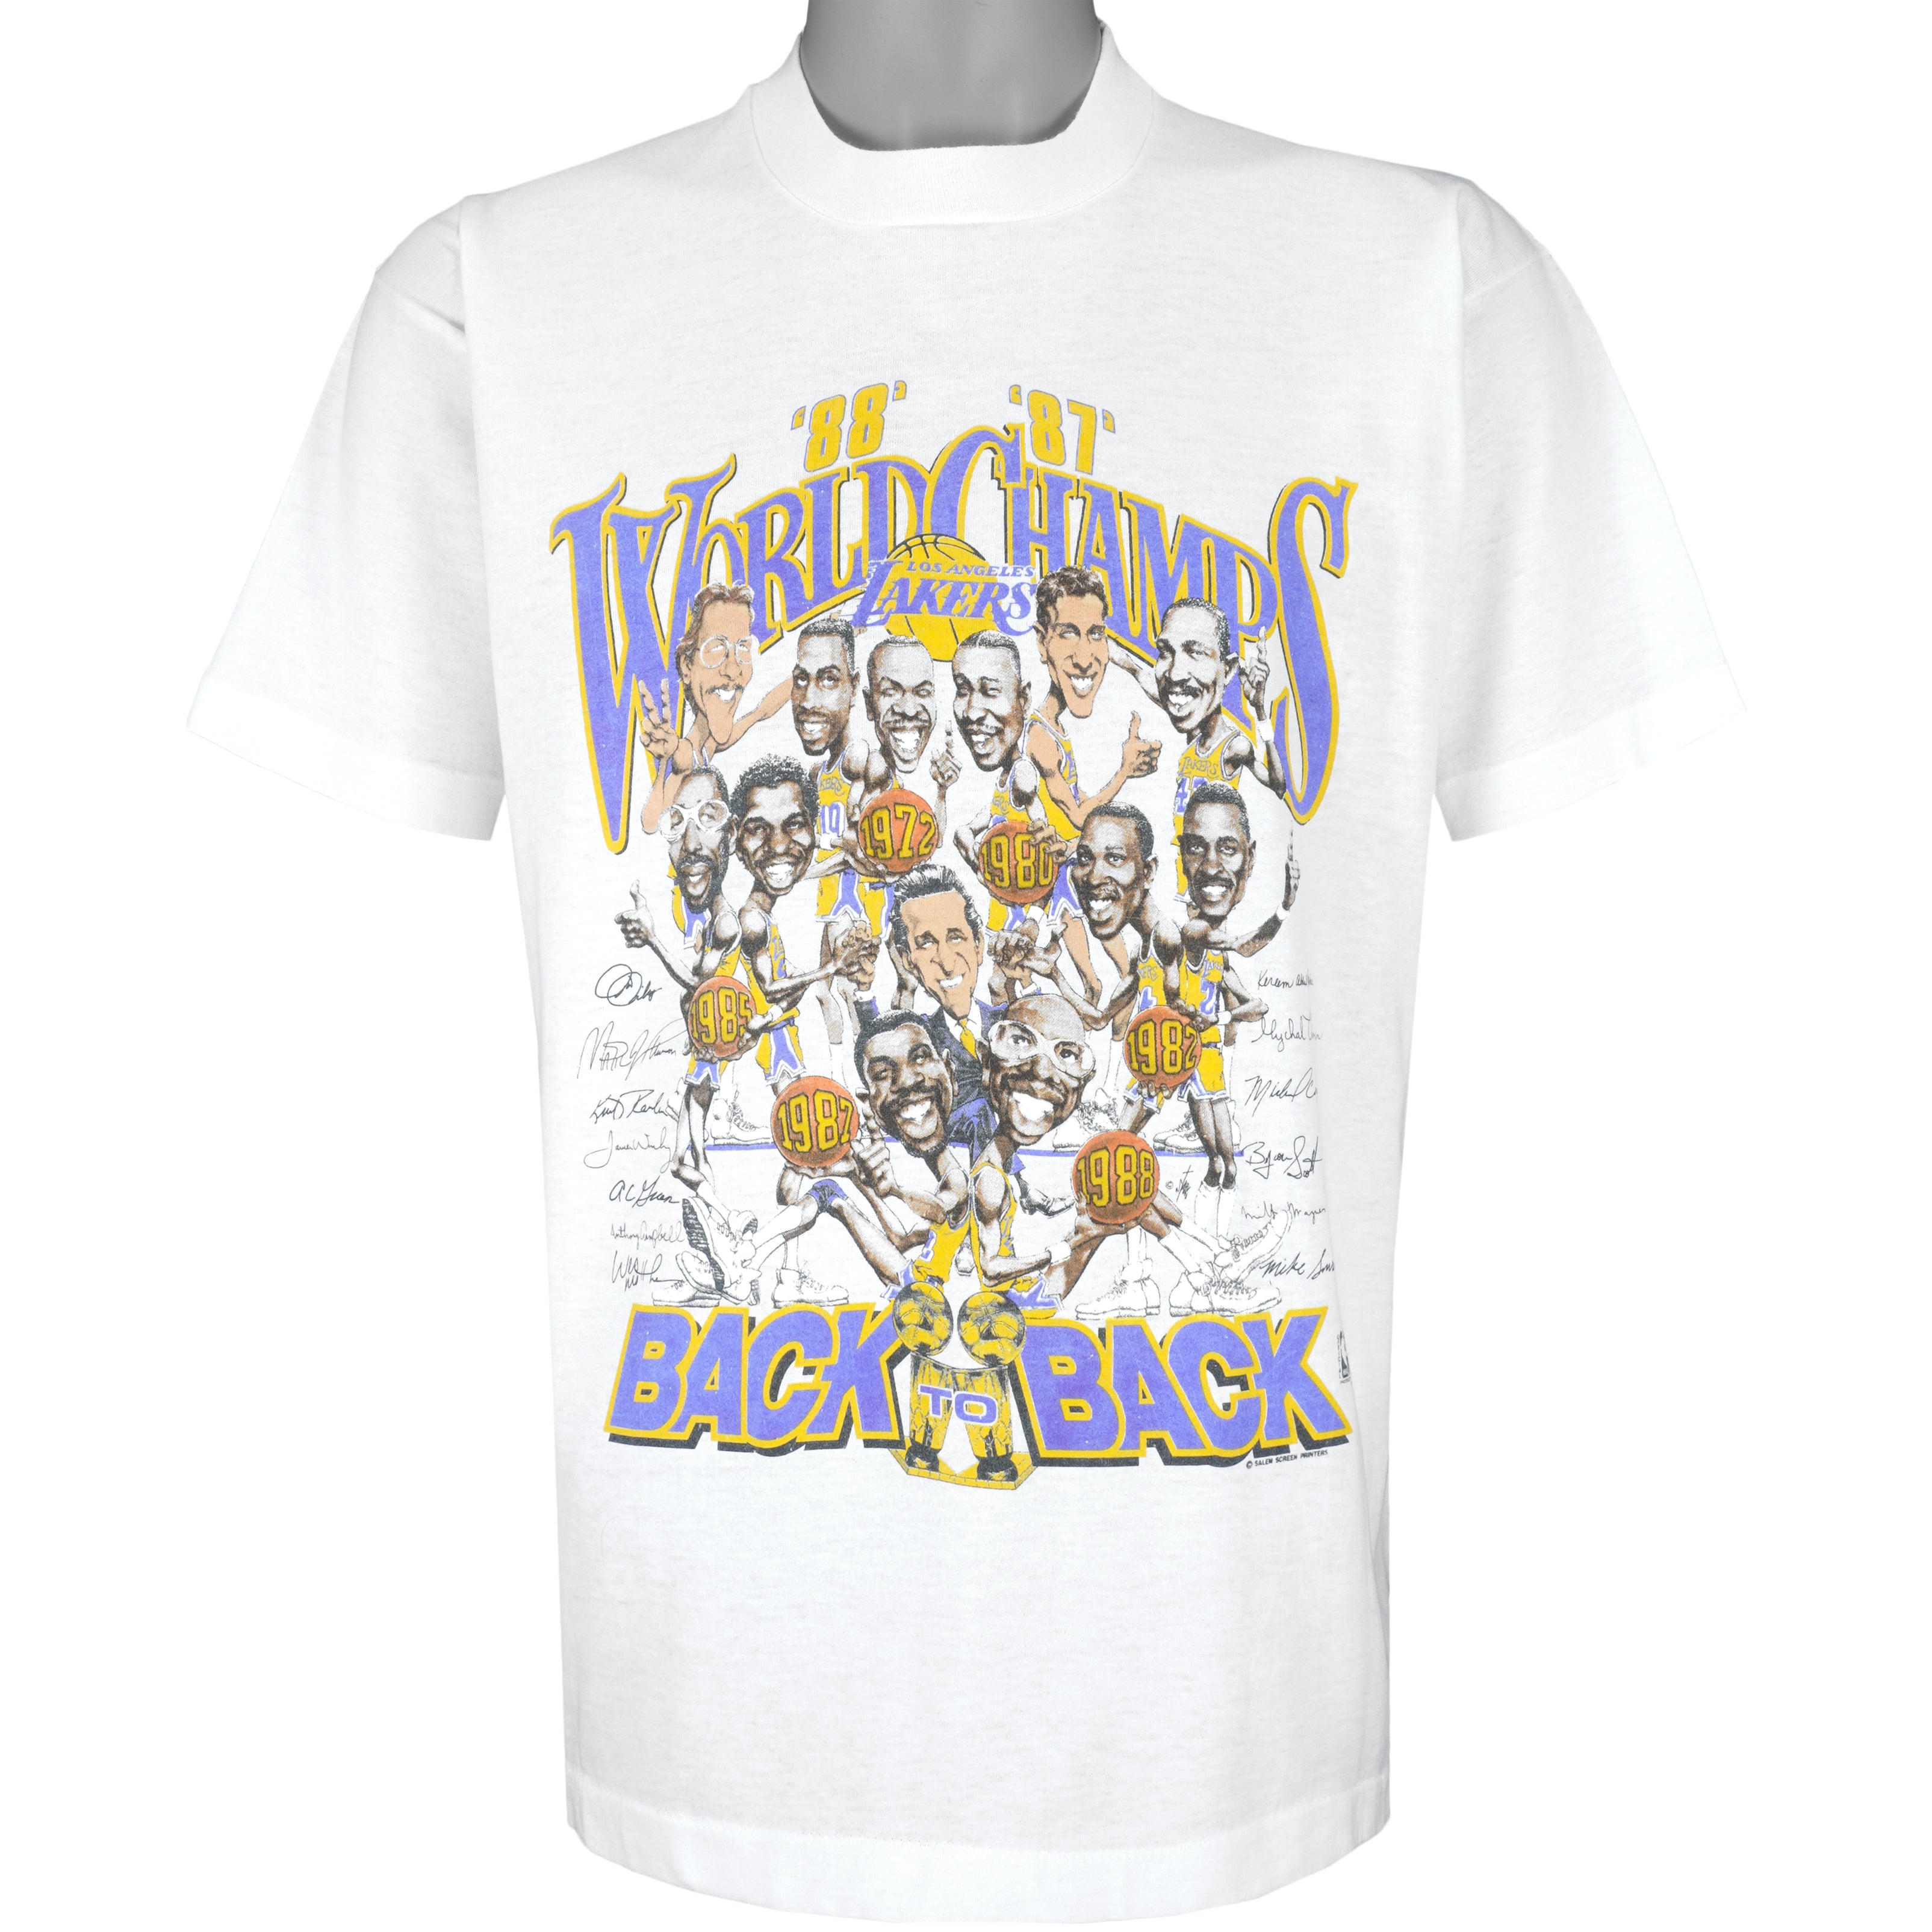 New era Los Angeles Lakers Championship Sleeveless T-Shirt Grey